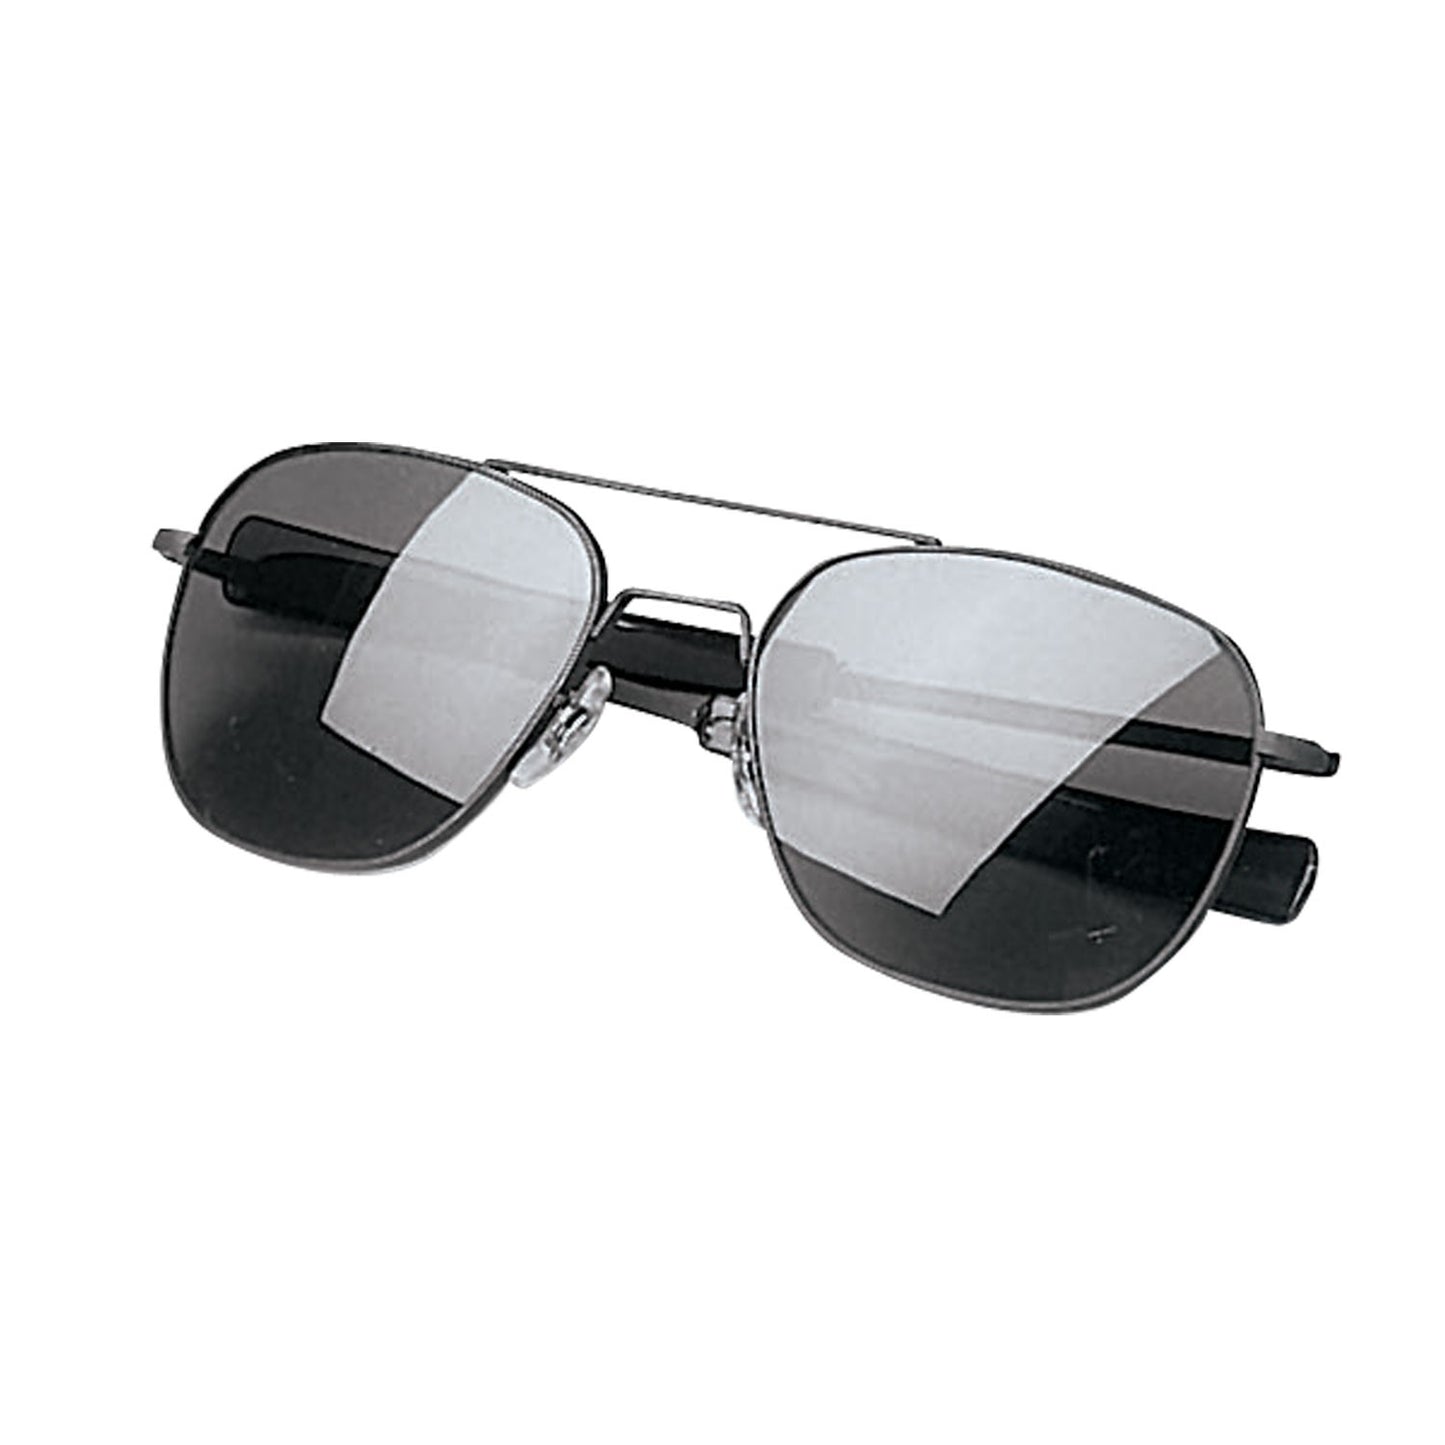 GI Type Aviator Sunglasses